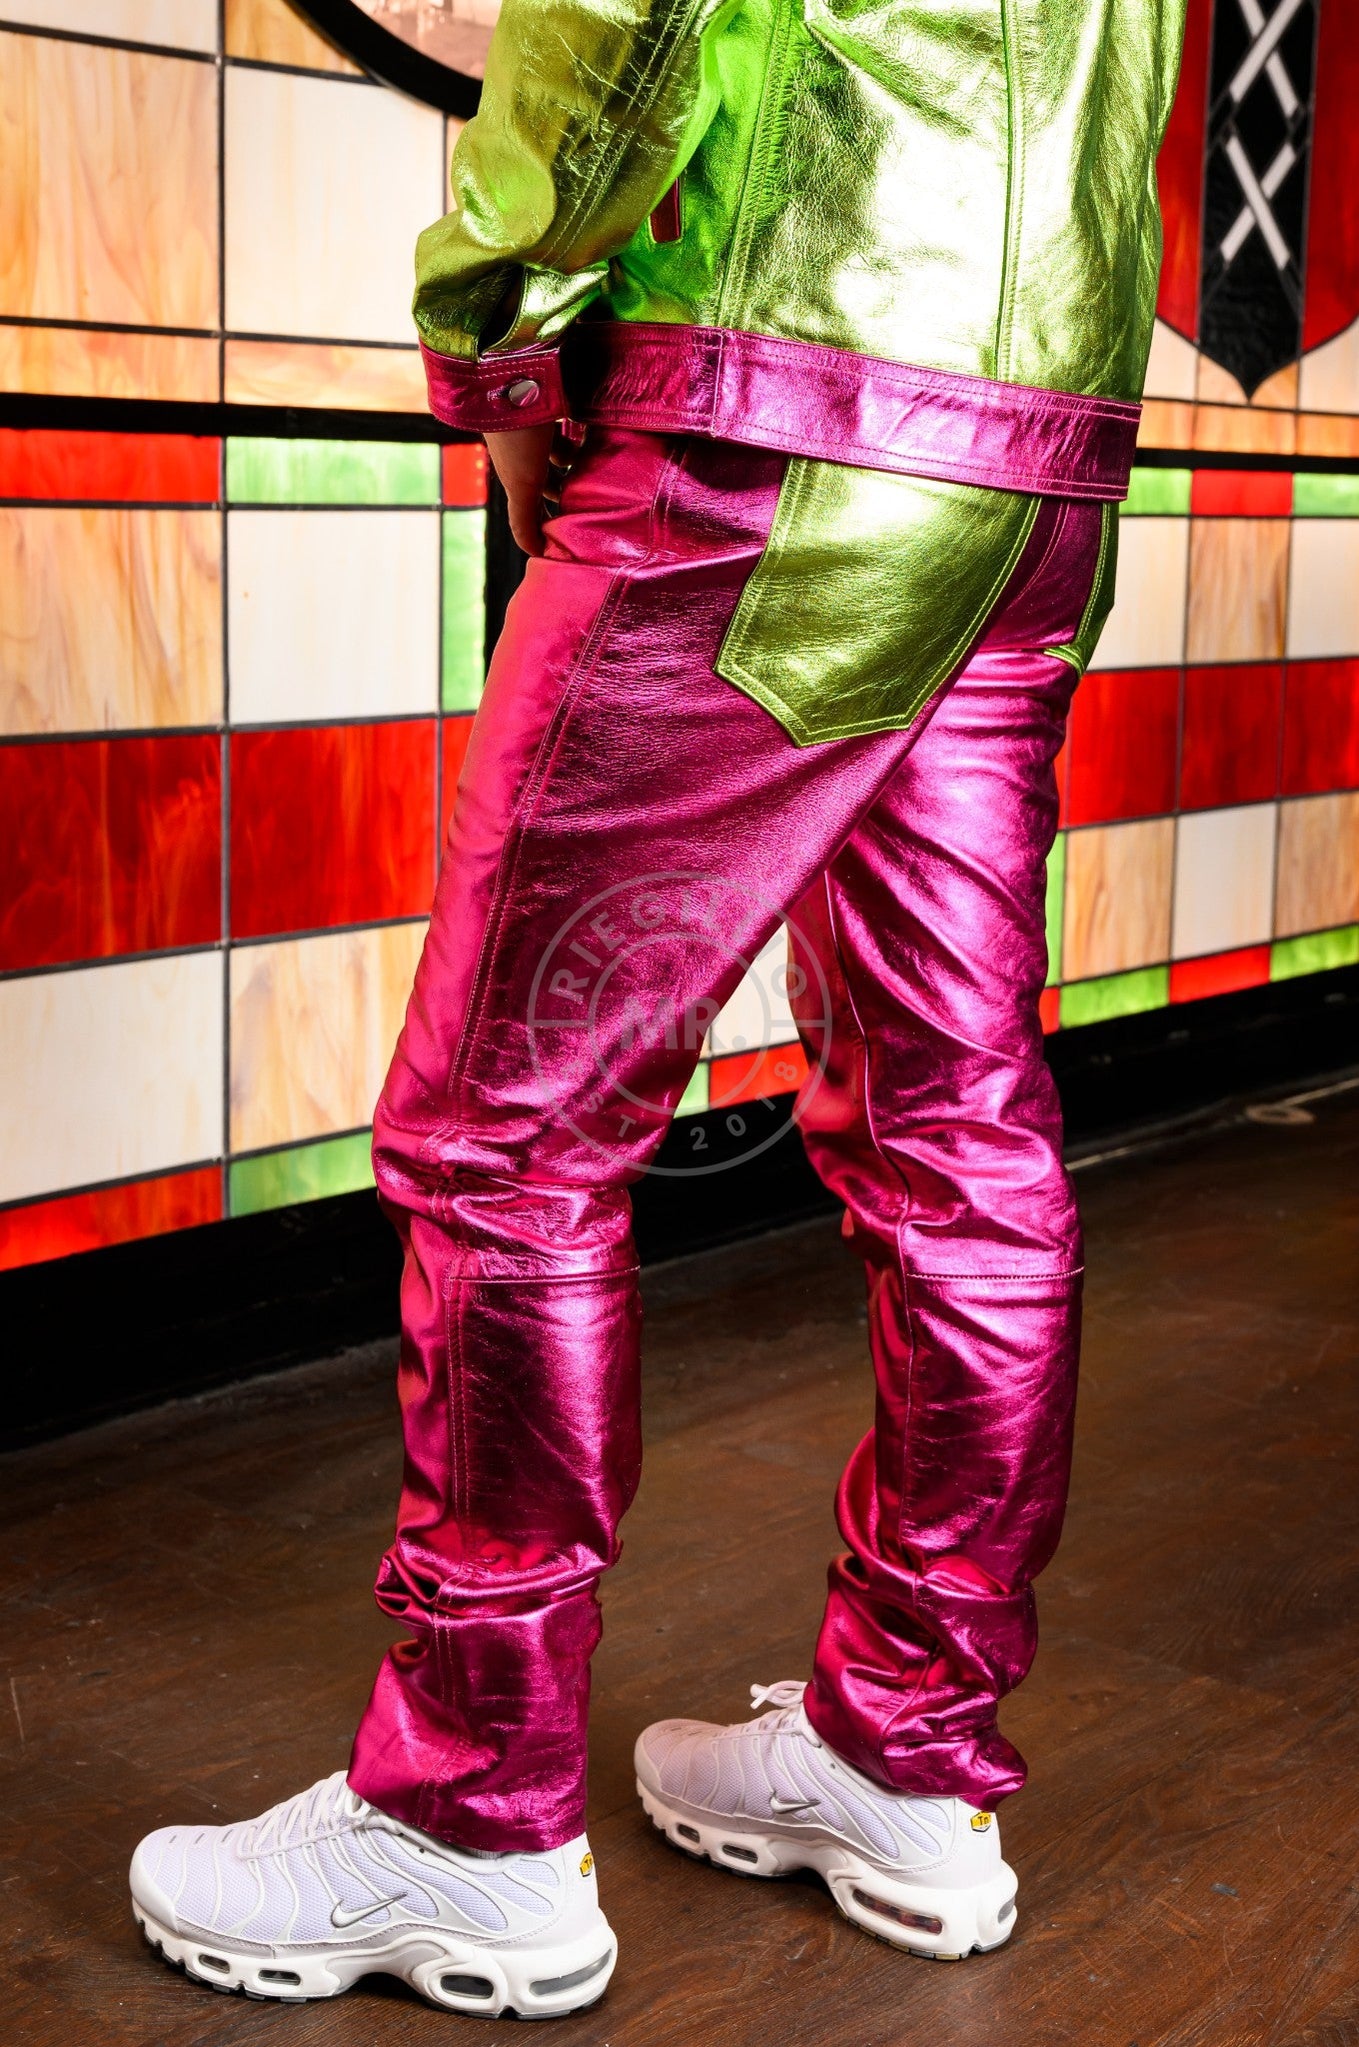 Pink Metallic Leather Pants at MR. Riegillio